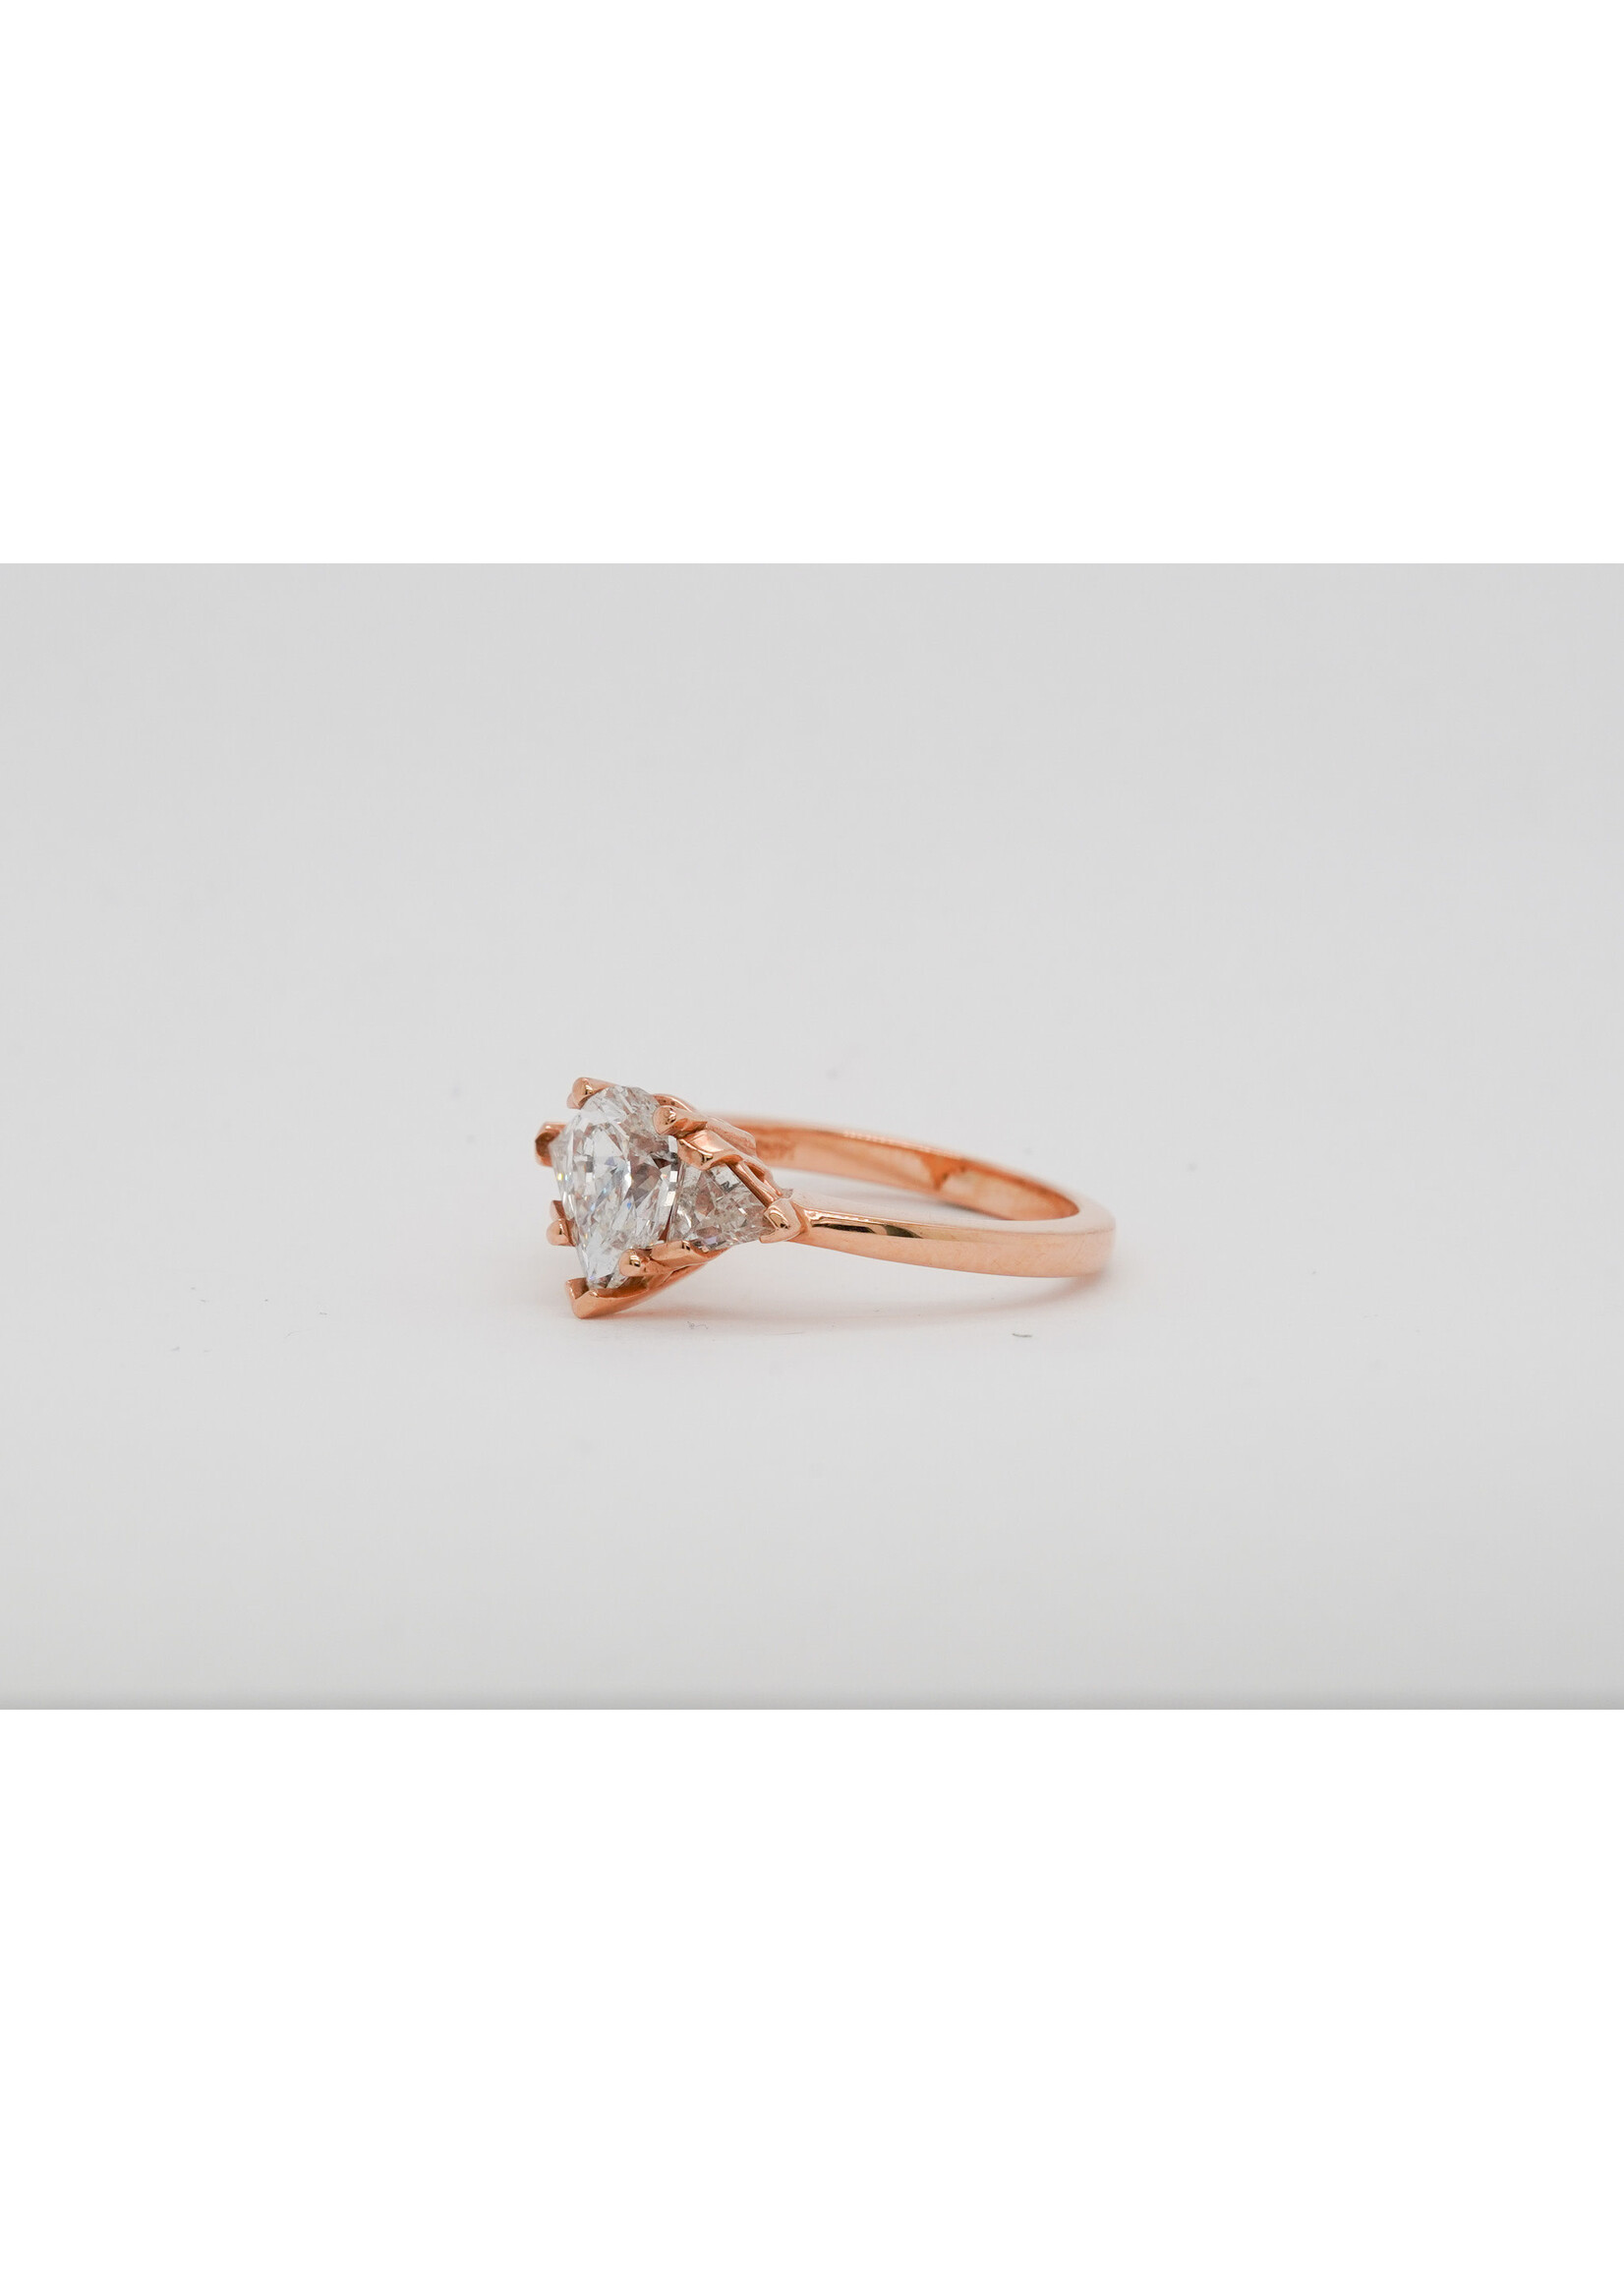 14KR 3.22g 2.10ctw (1.21ctr) H/SI1 Pear Diamond Three Stone Engagement Ring (size 6)